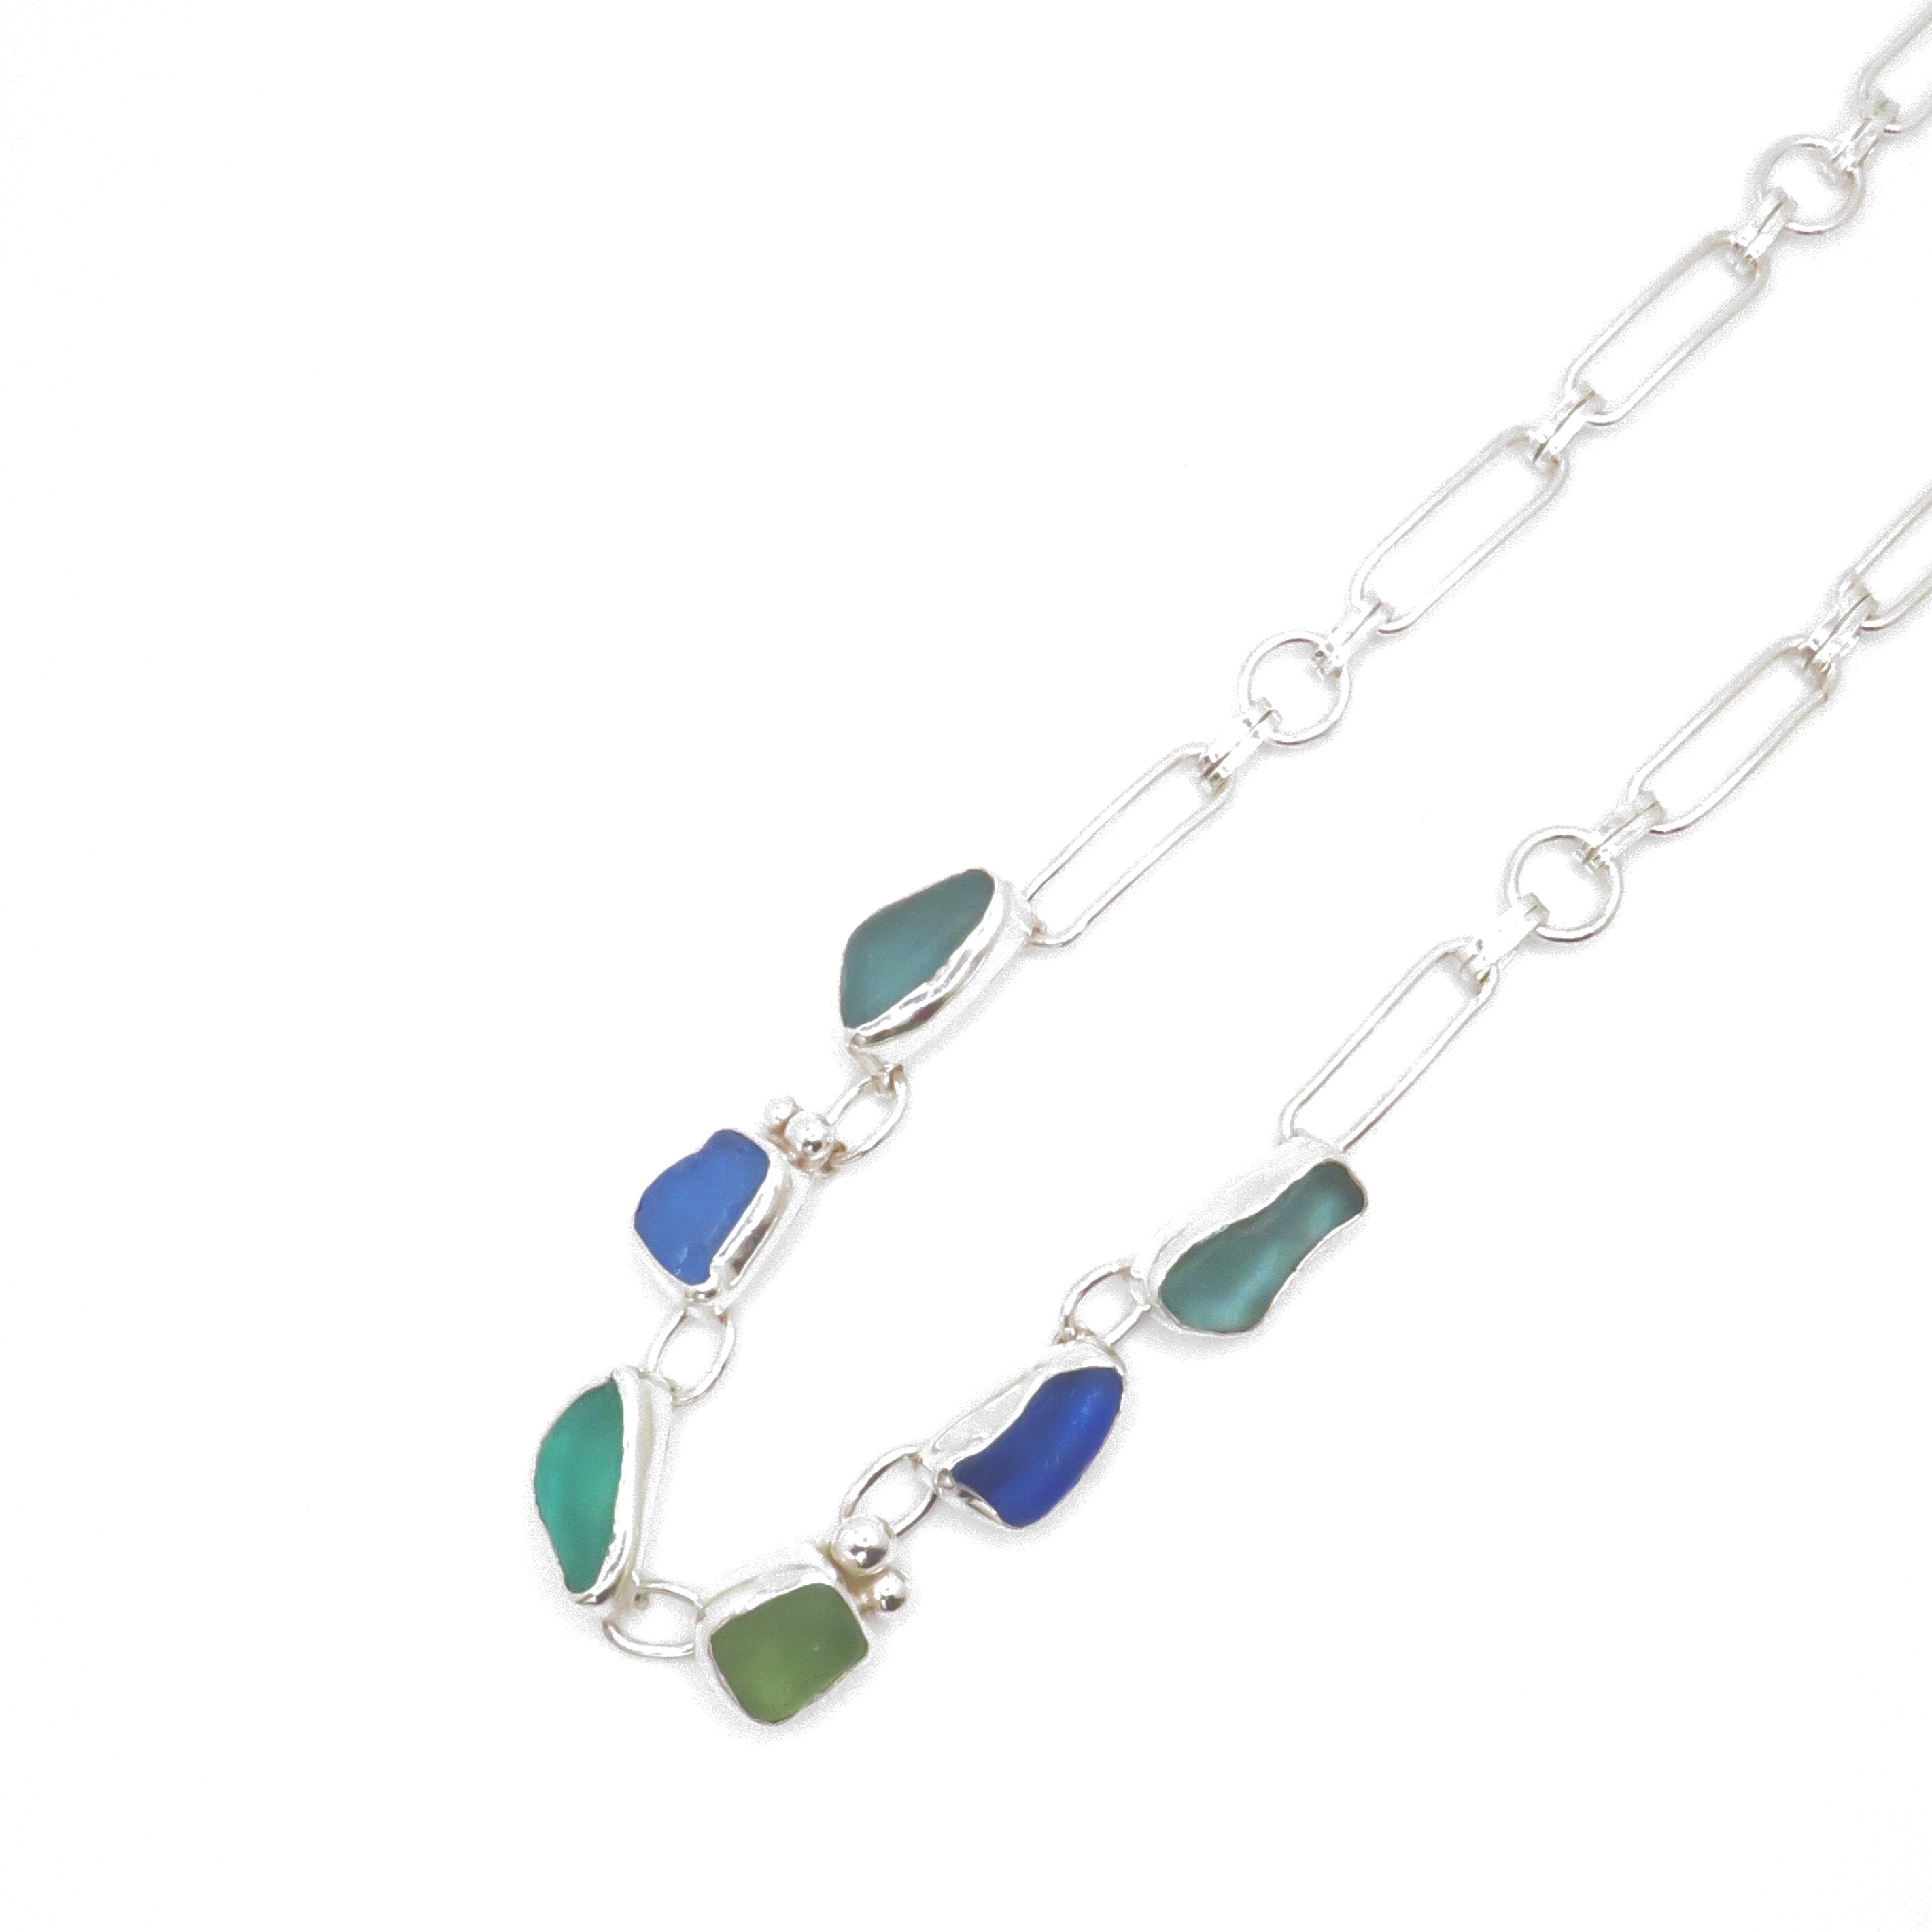 seaglass chain necklace